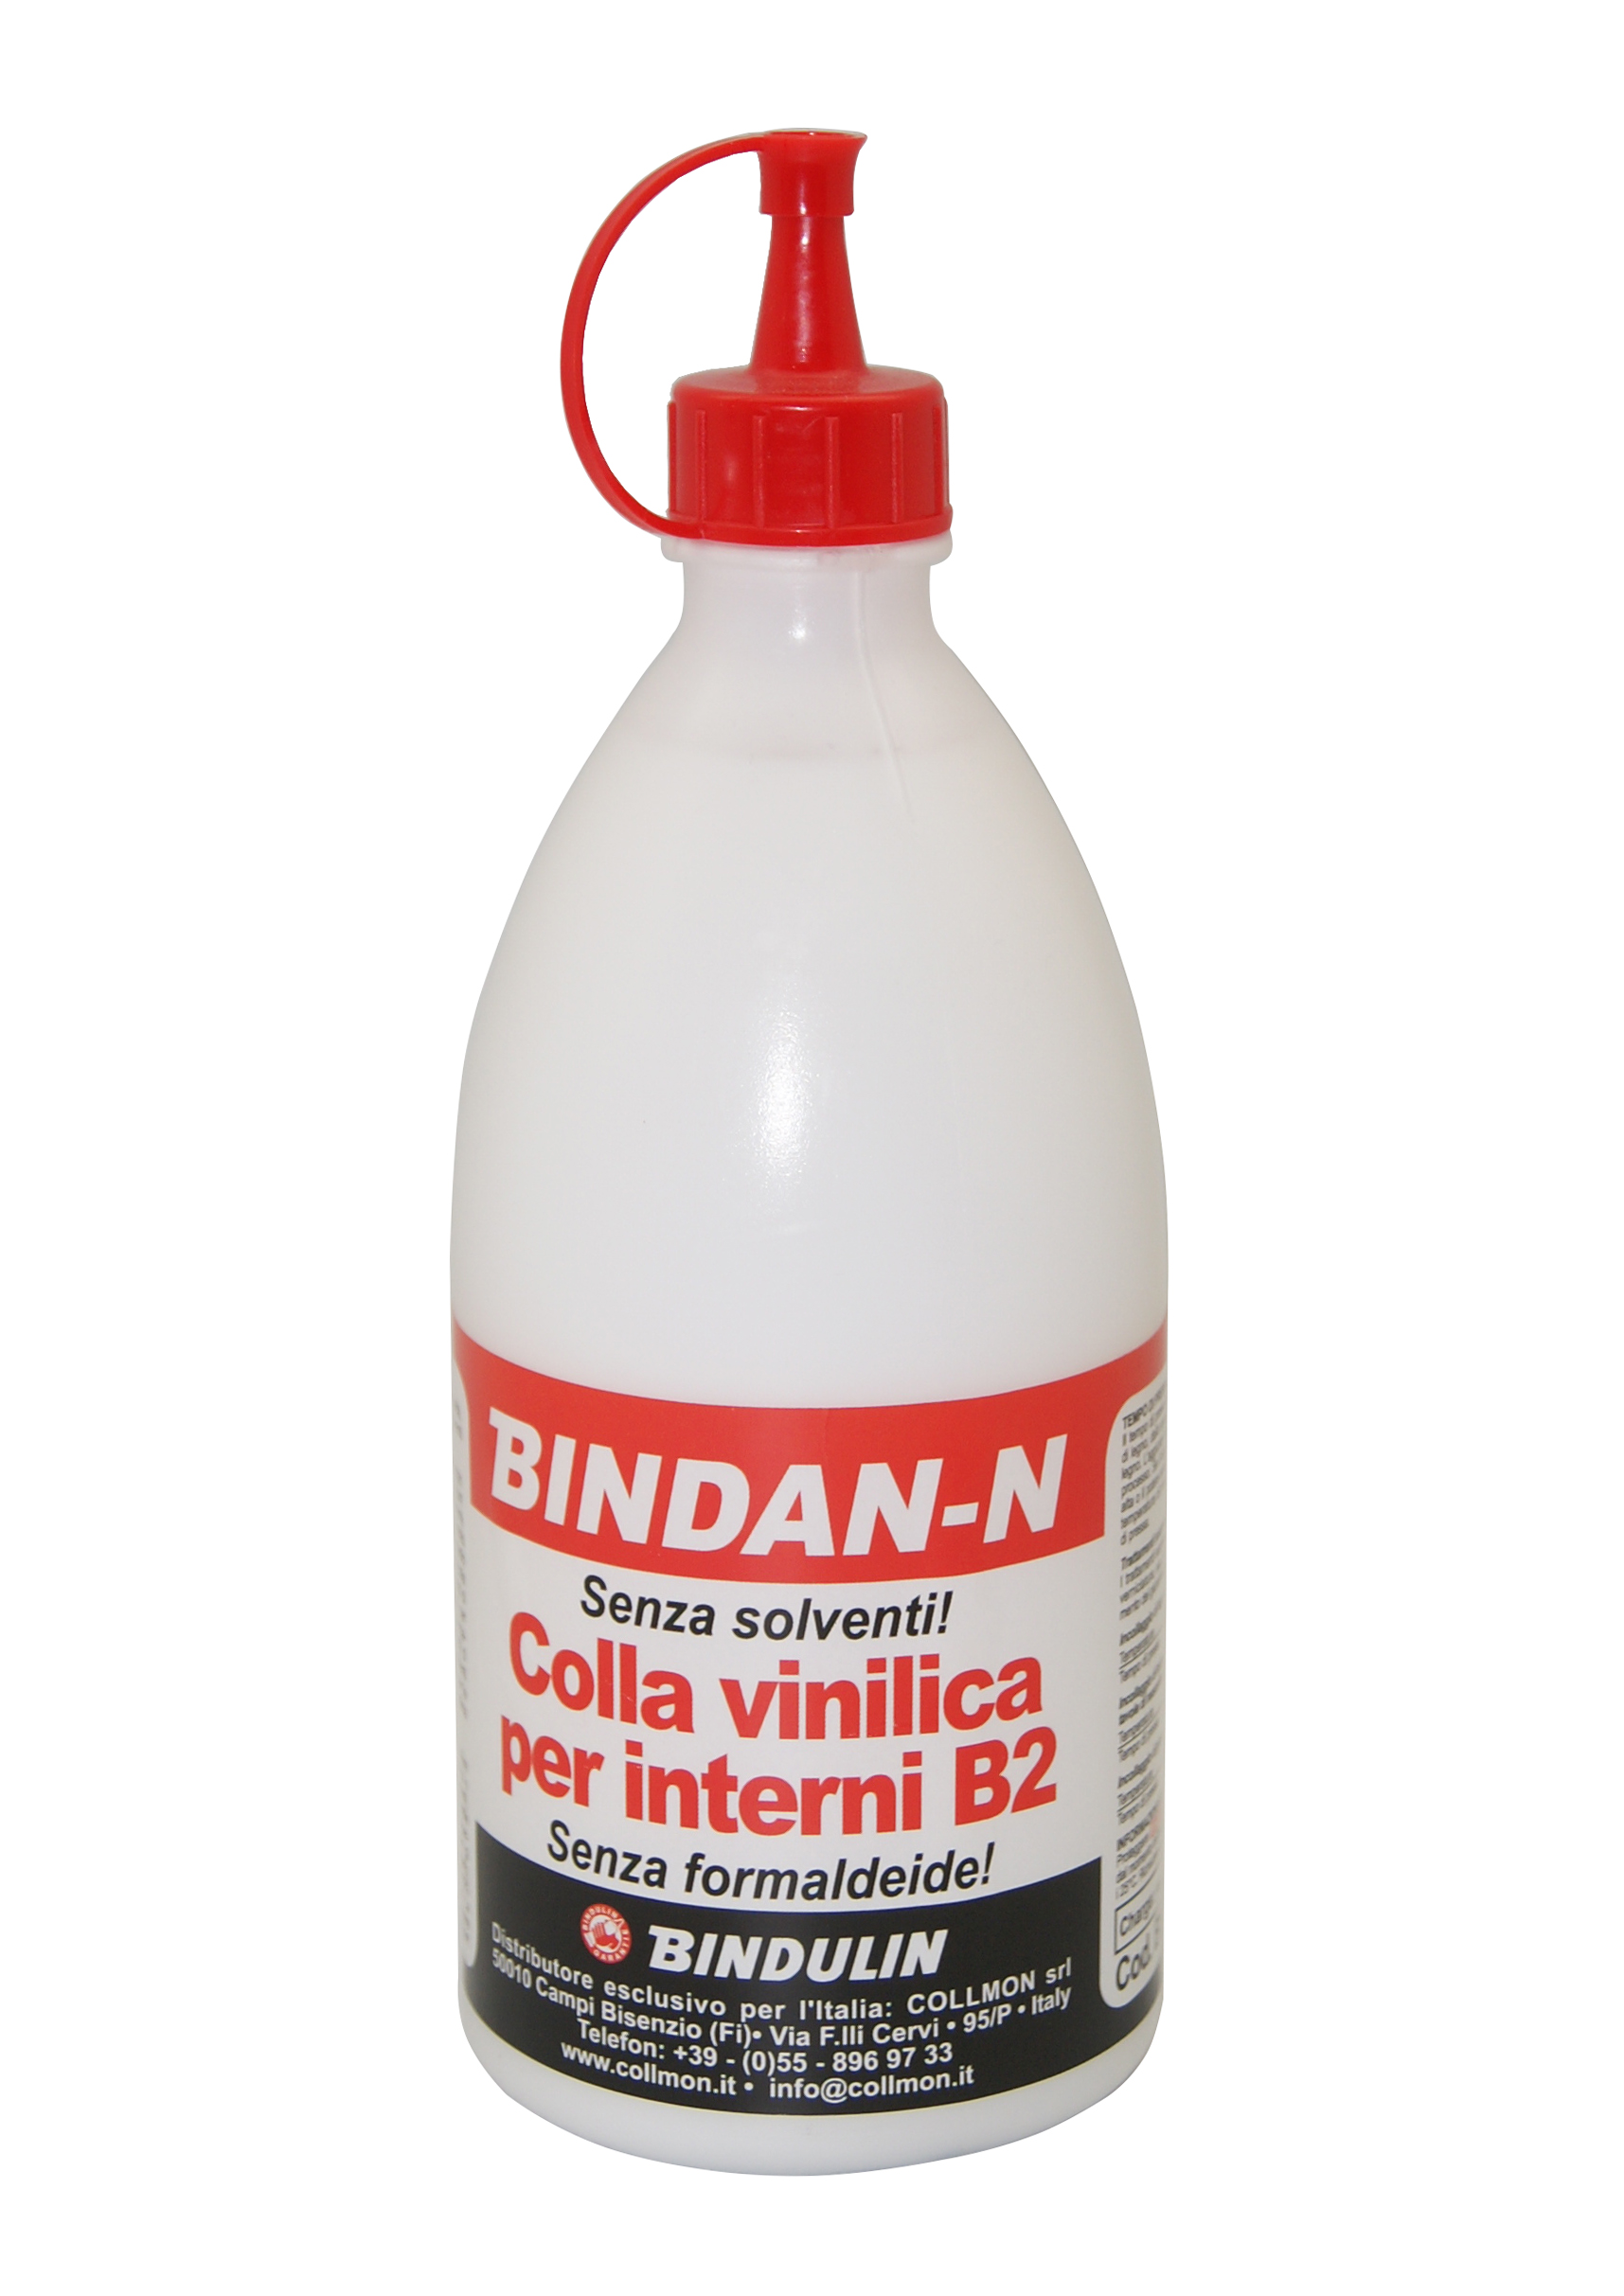 Bindulin - bindan-n vinilico b2 traspar. 600 g